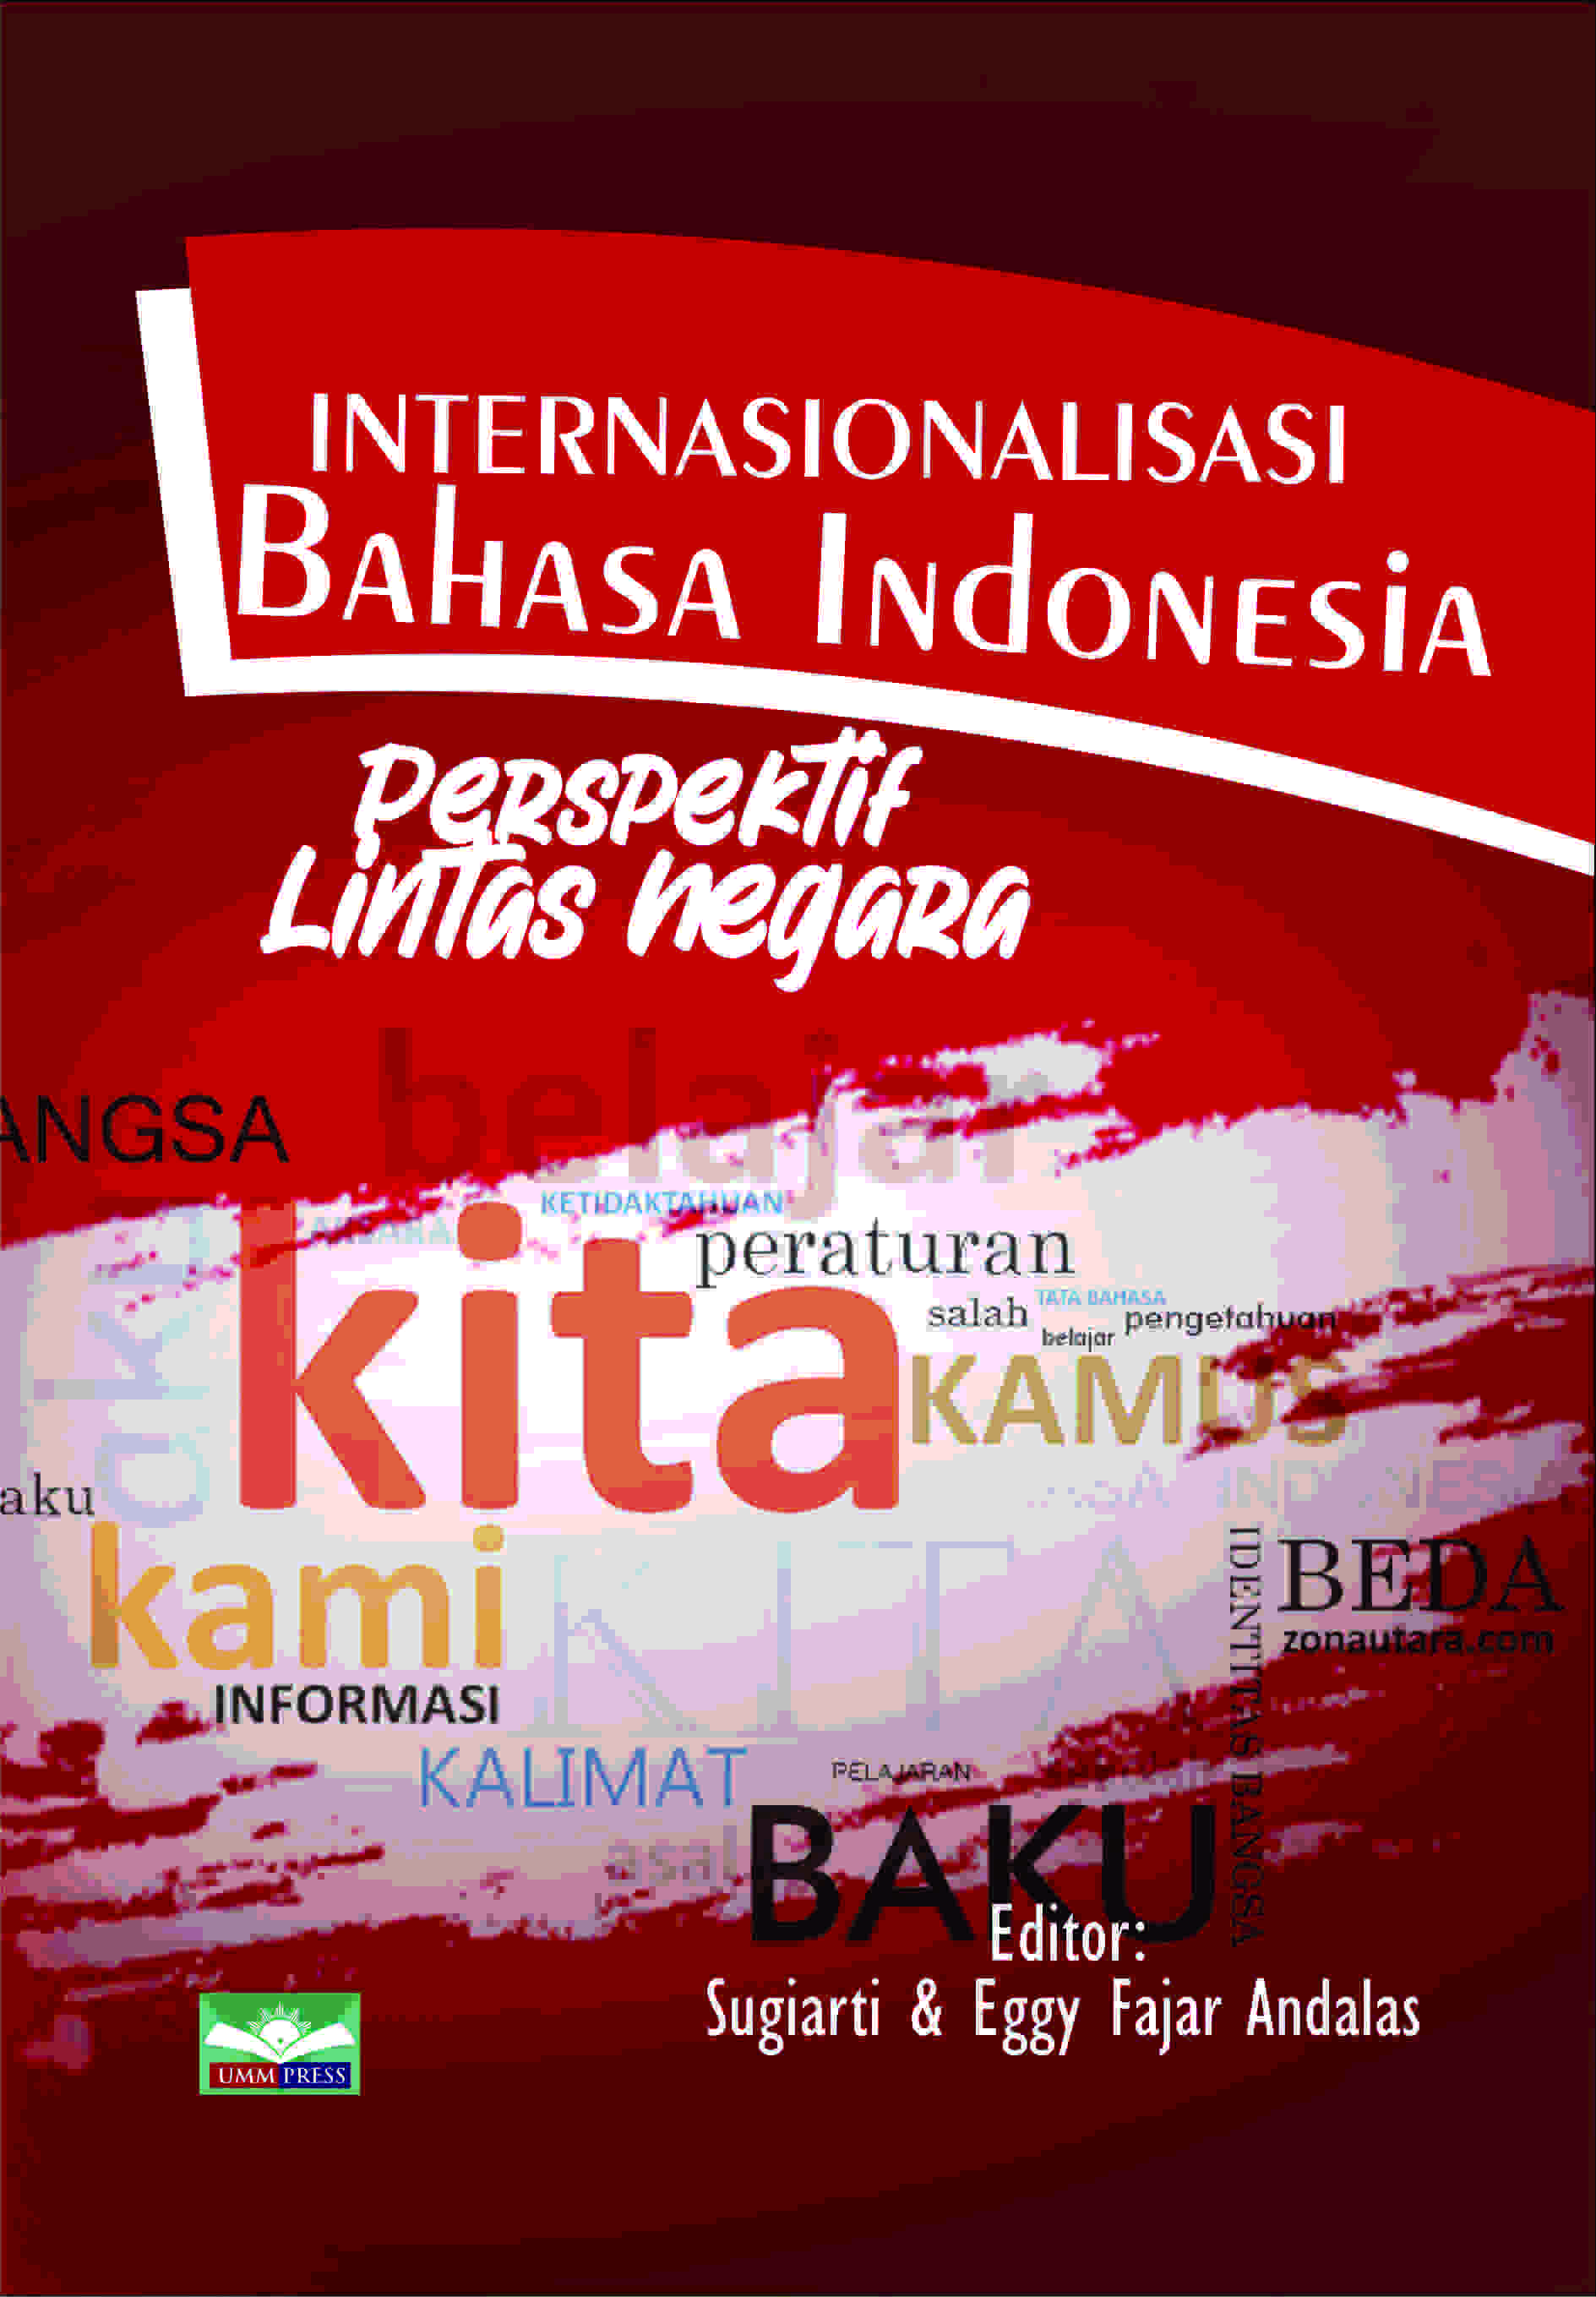 INTERNASIONALISASI BAHASA INDONESIA PERSPEKTIF LINTAS NEGARA